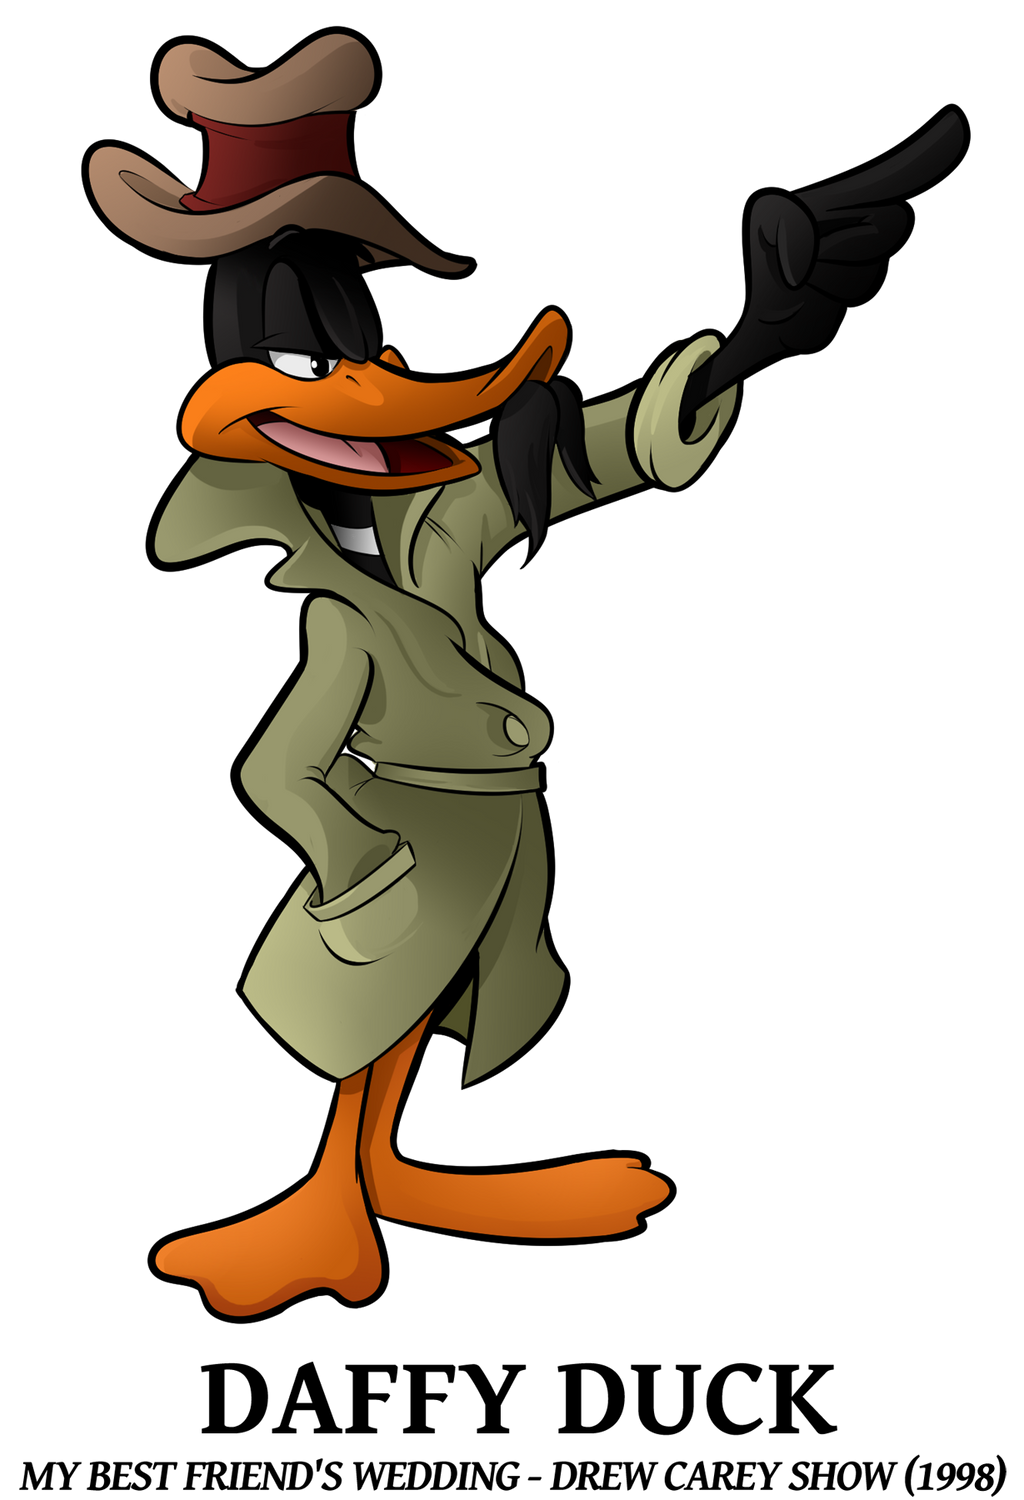 1998 - Daffy Duck